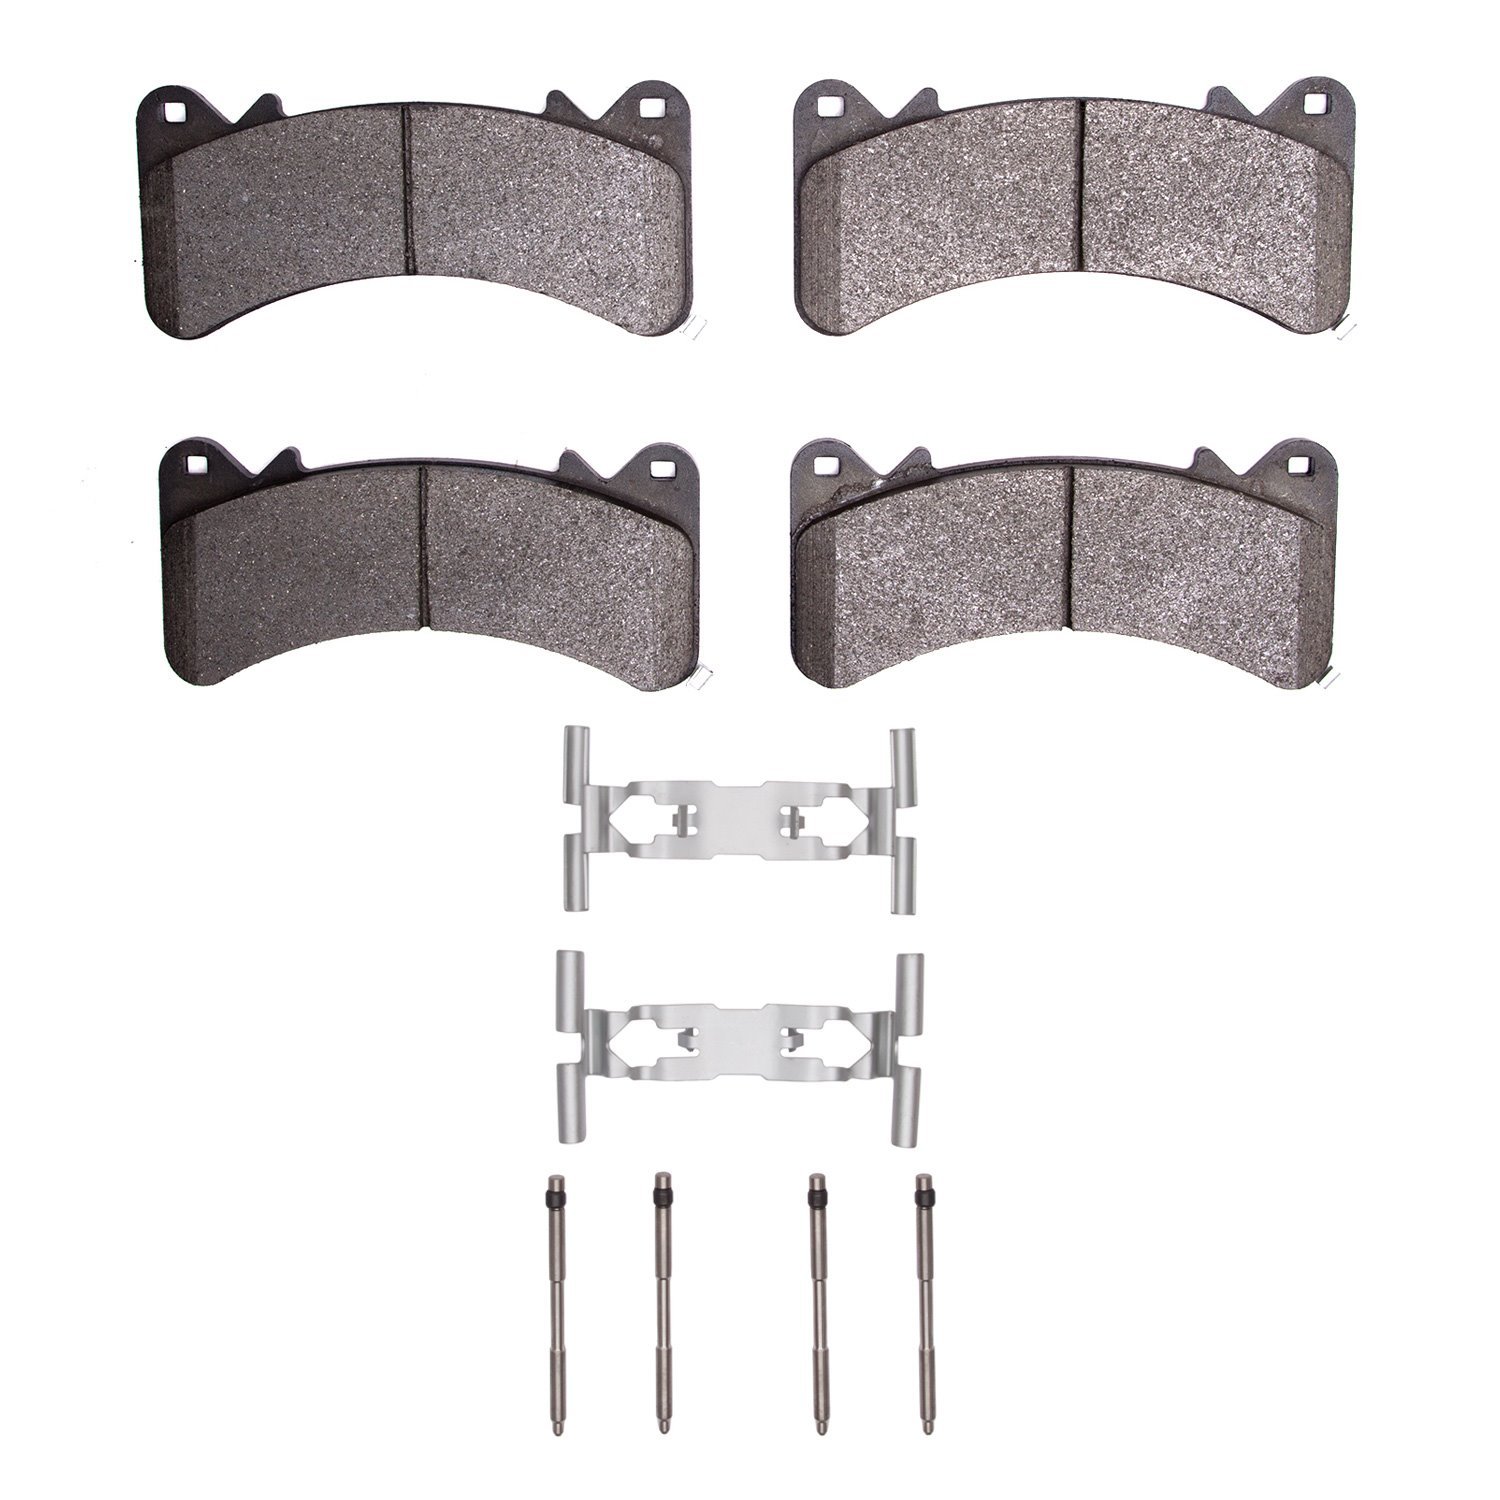 Optimum OE Brake Pads & Hardware Kit, Fits Select GM, Position: Front